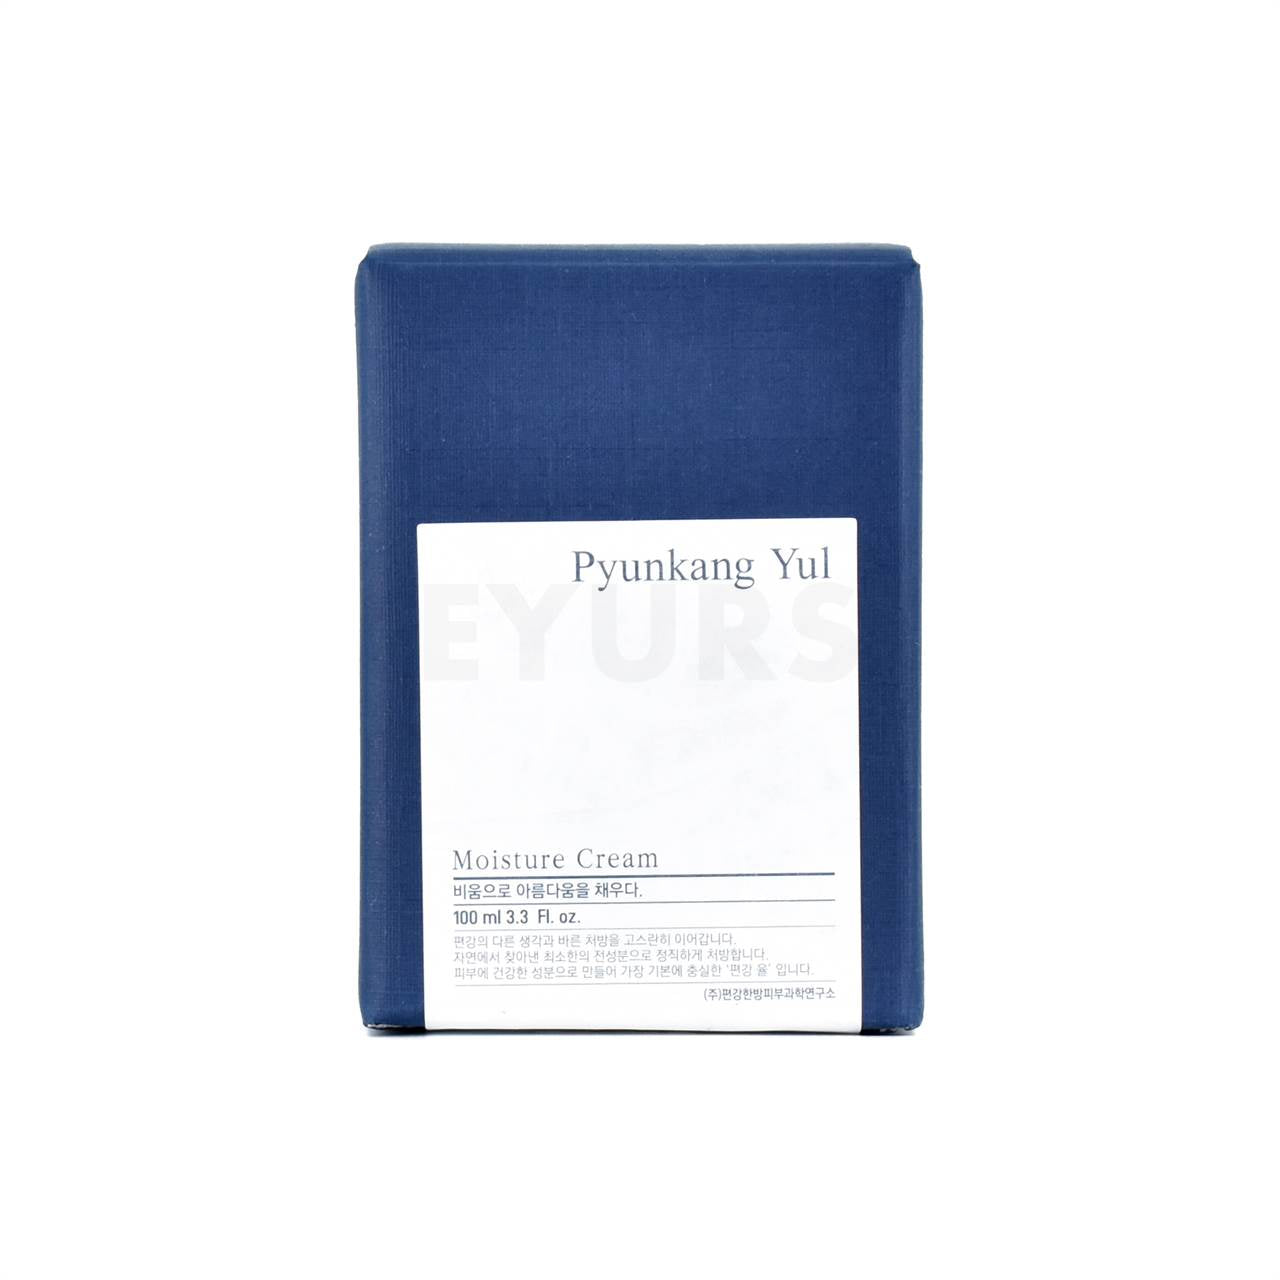 pyunkang yul moisture cream front side packaging